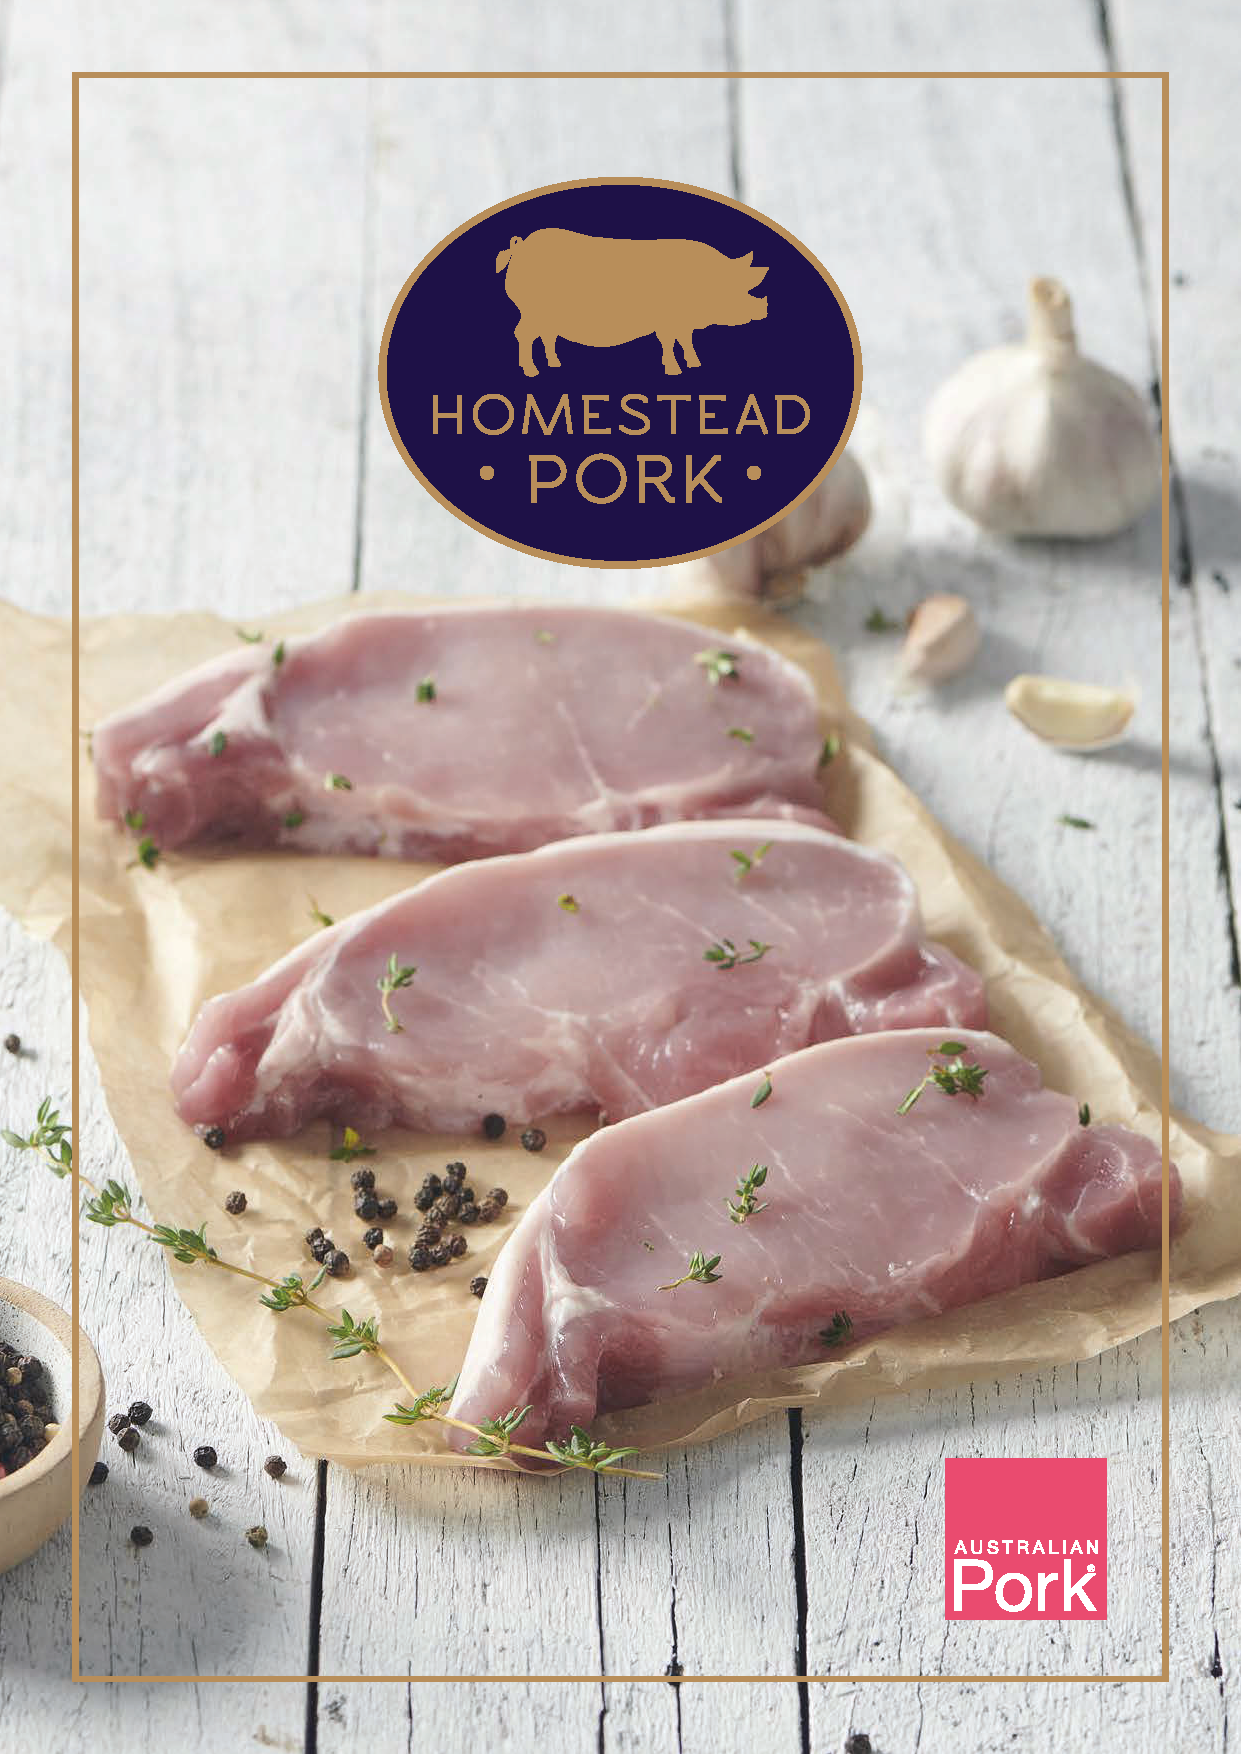 Homestead pork